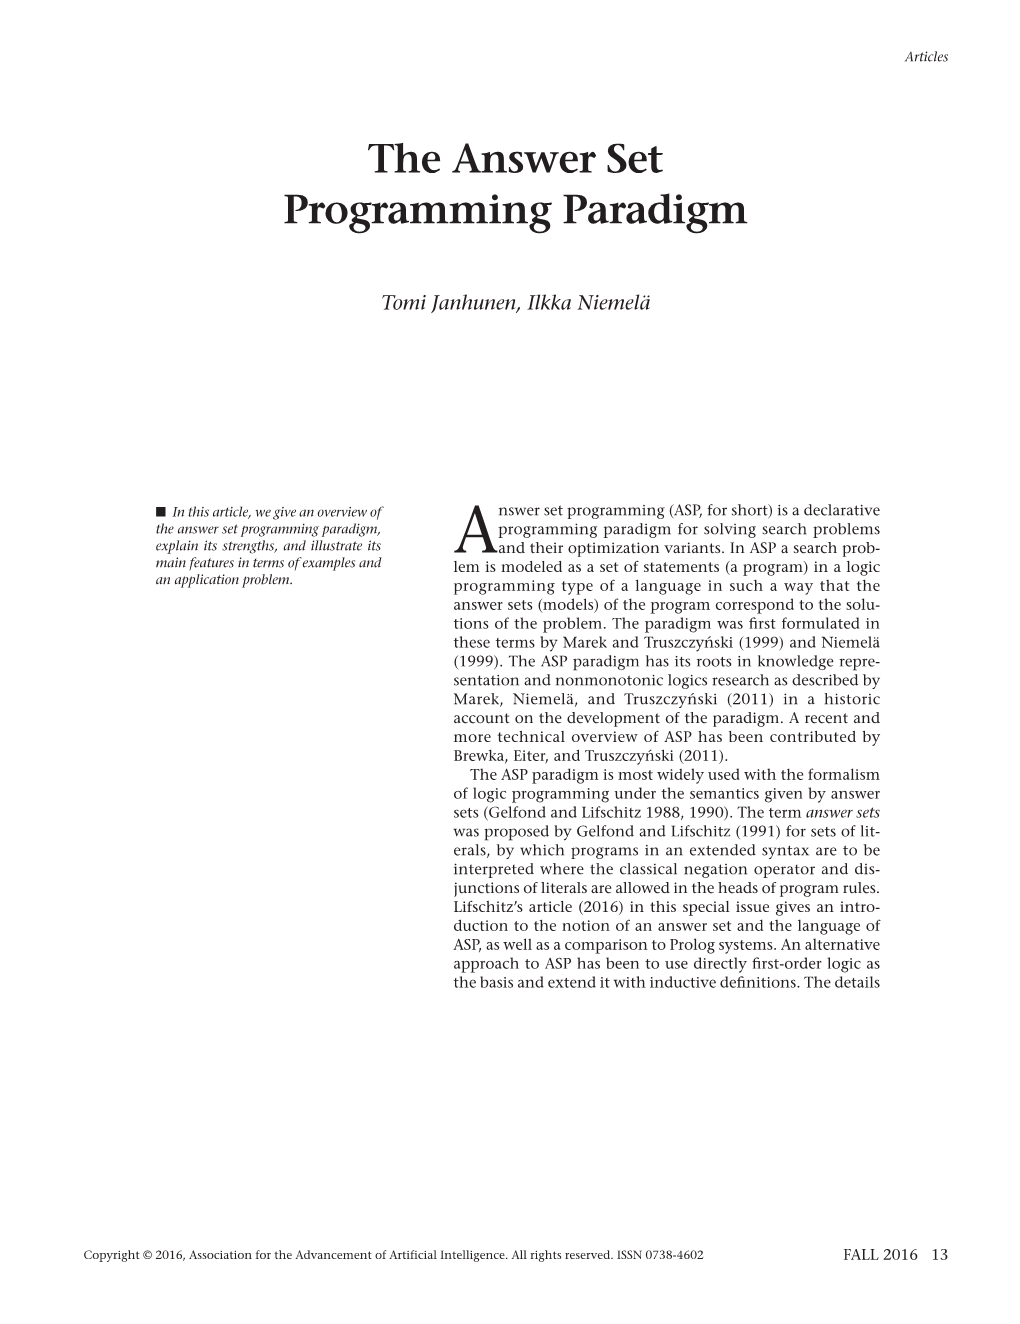 The Answer Set Programming Paradigm